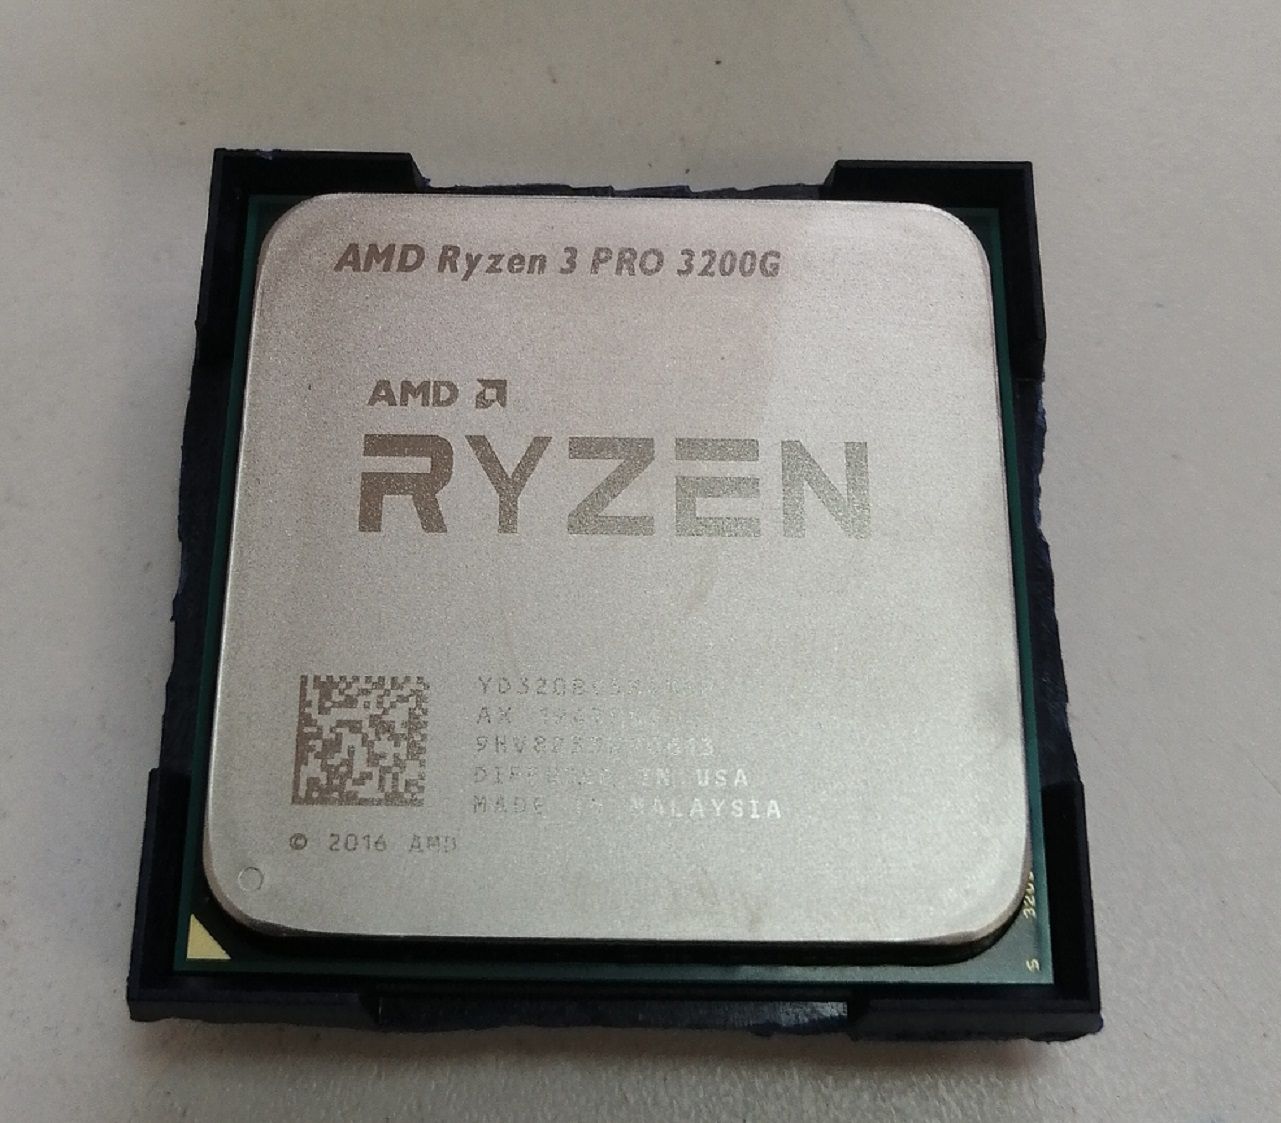 3 pro 3200g. AMD Ryzen 3 3200g. AMD Ryzen 3 Pro 3200g. Процессор AMD Ryzen 3 3200g am4. Ryzen 3 Pro 3200g процессор.